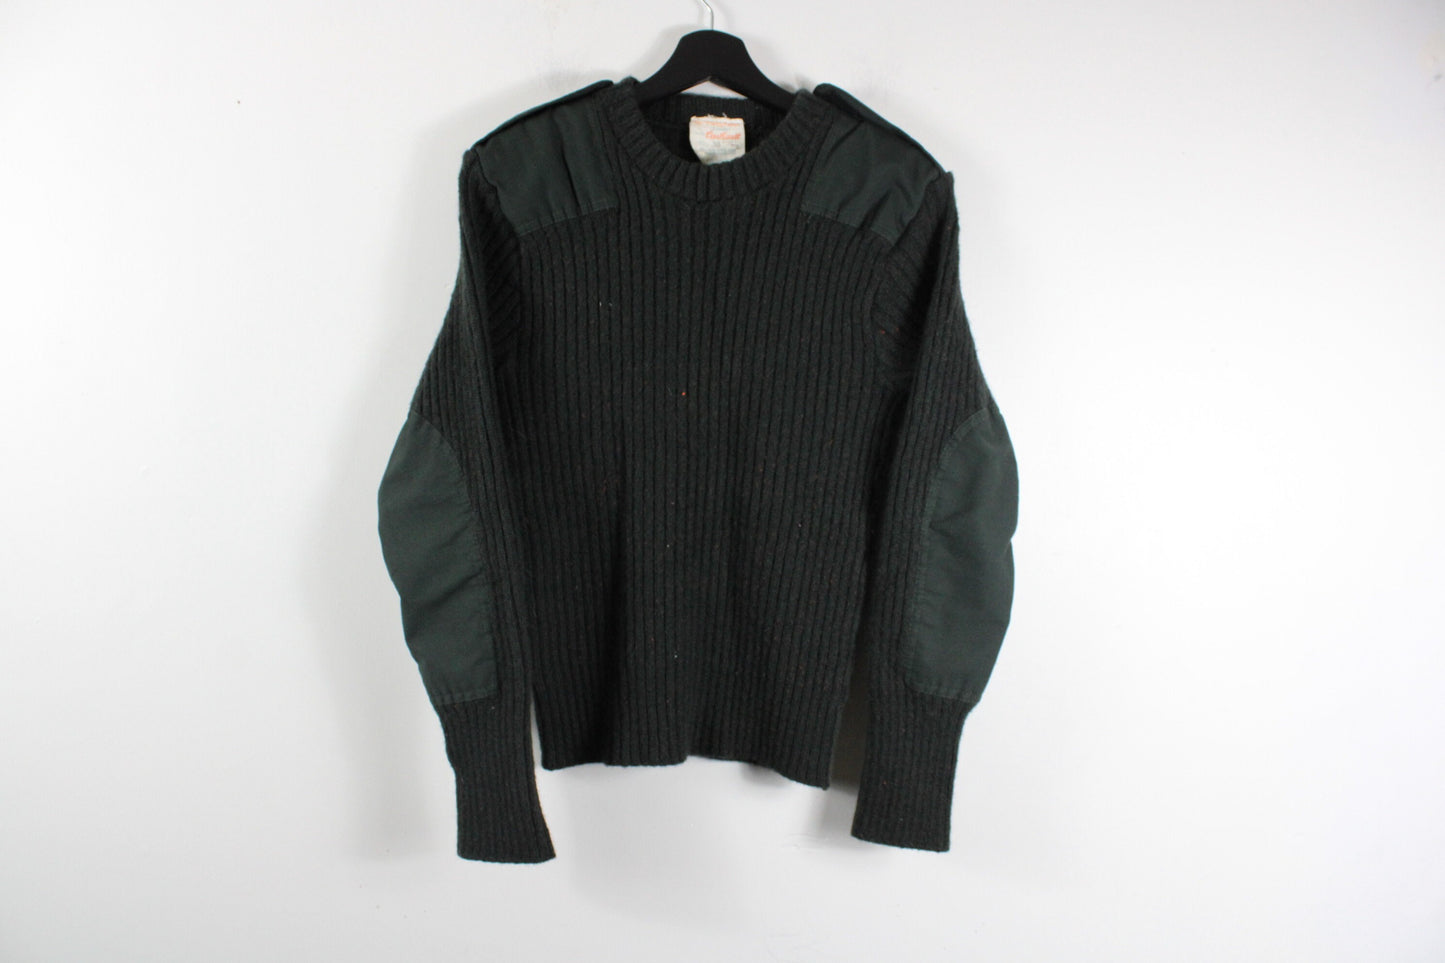 Carhartt Virgin-Wool Sweater / 60s Vintage Cable-Knit Sweatshirt / 1960s Work Wear Utility / Heavy Construction Clothing